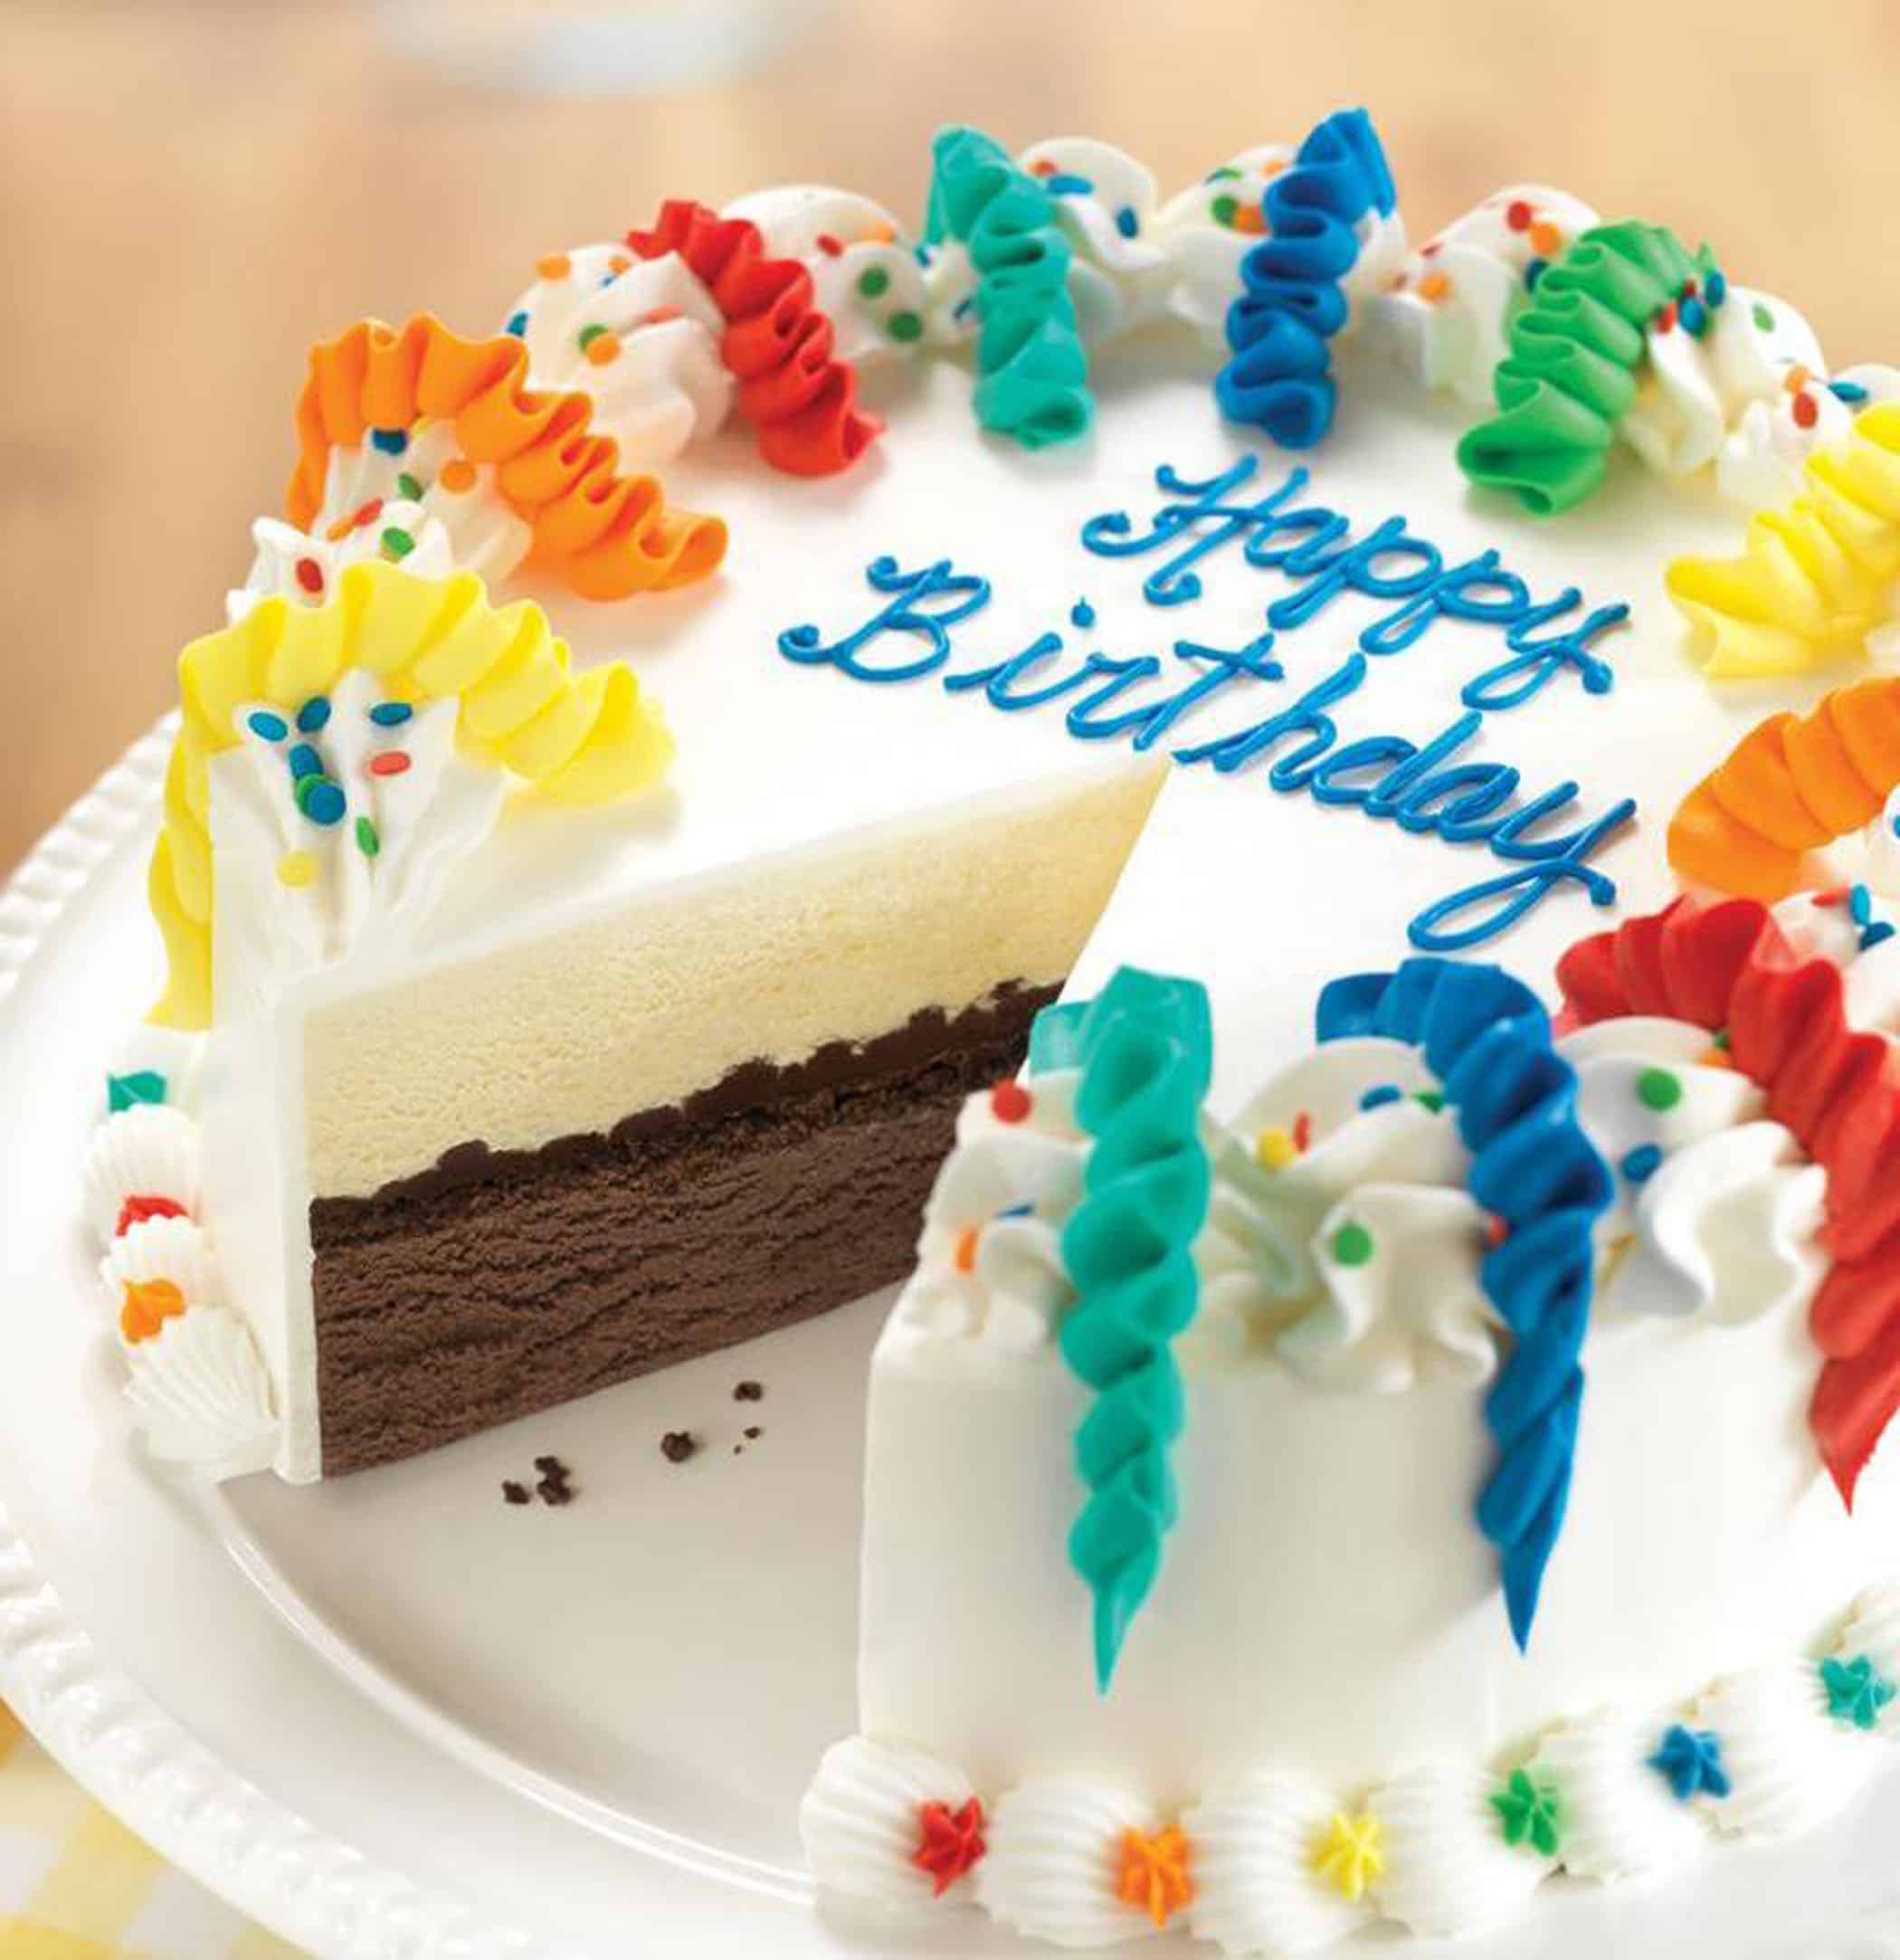 20 Best Ideas Baskin Robbins Birthday Cakes â Home, Family, Style and ...